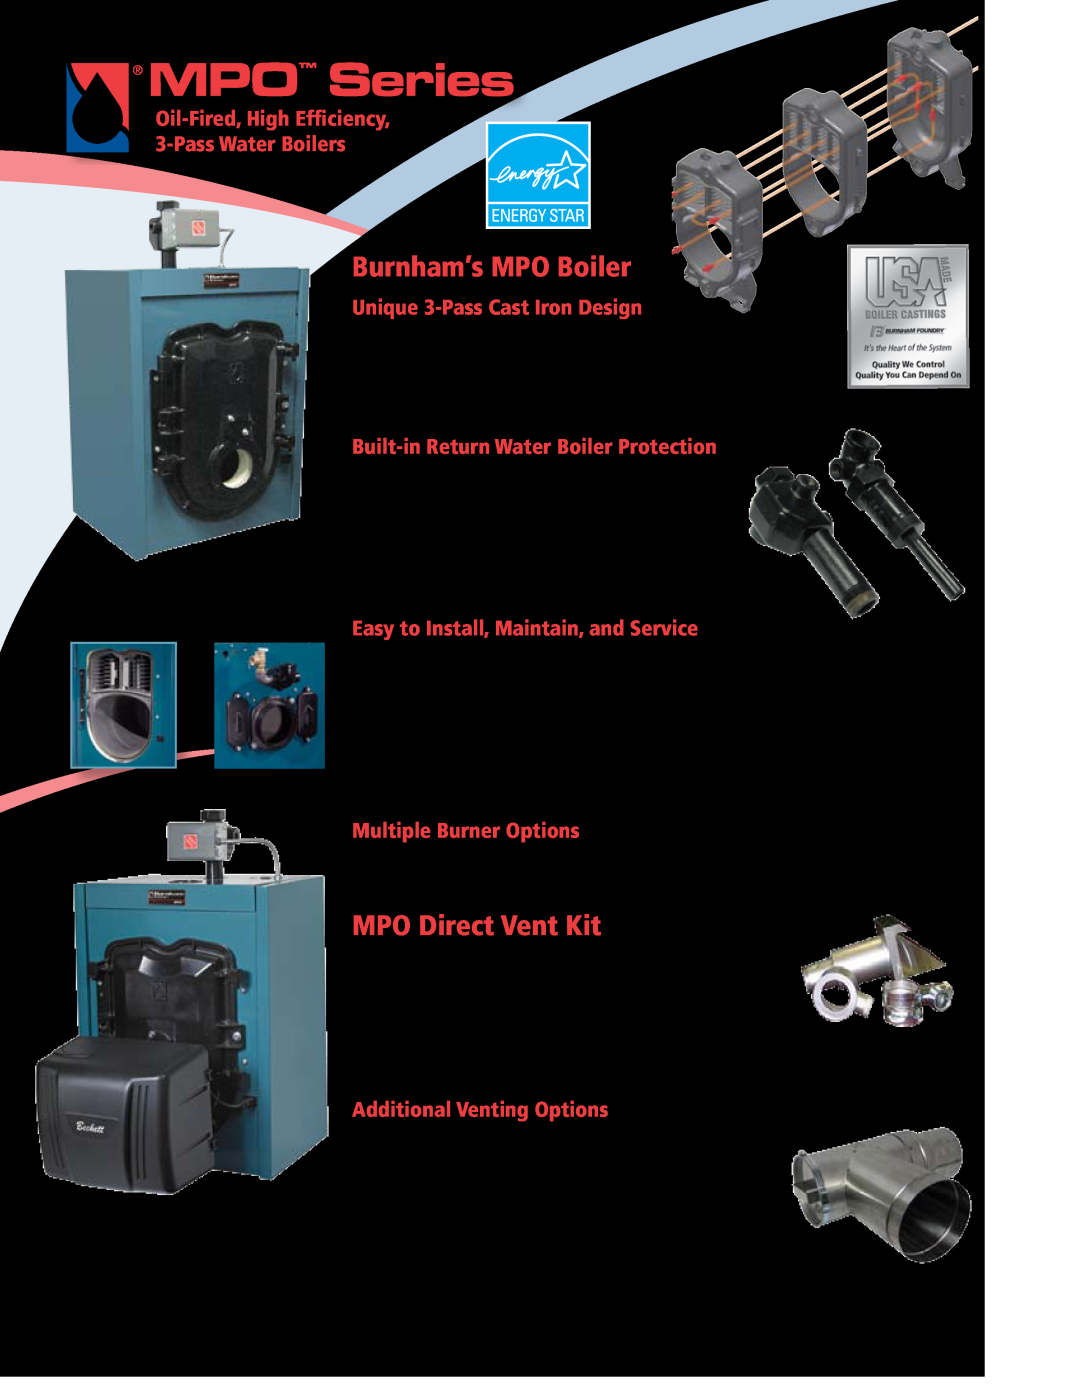 Burnham MPO Series manual Burnham’s MPO Boiler, MPO Direct Vent Kit, Oil-Fired, High Efficiency 3-Pass Water Boilers 